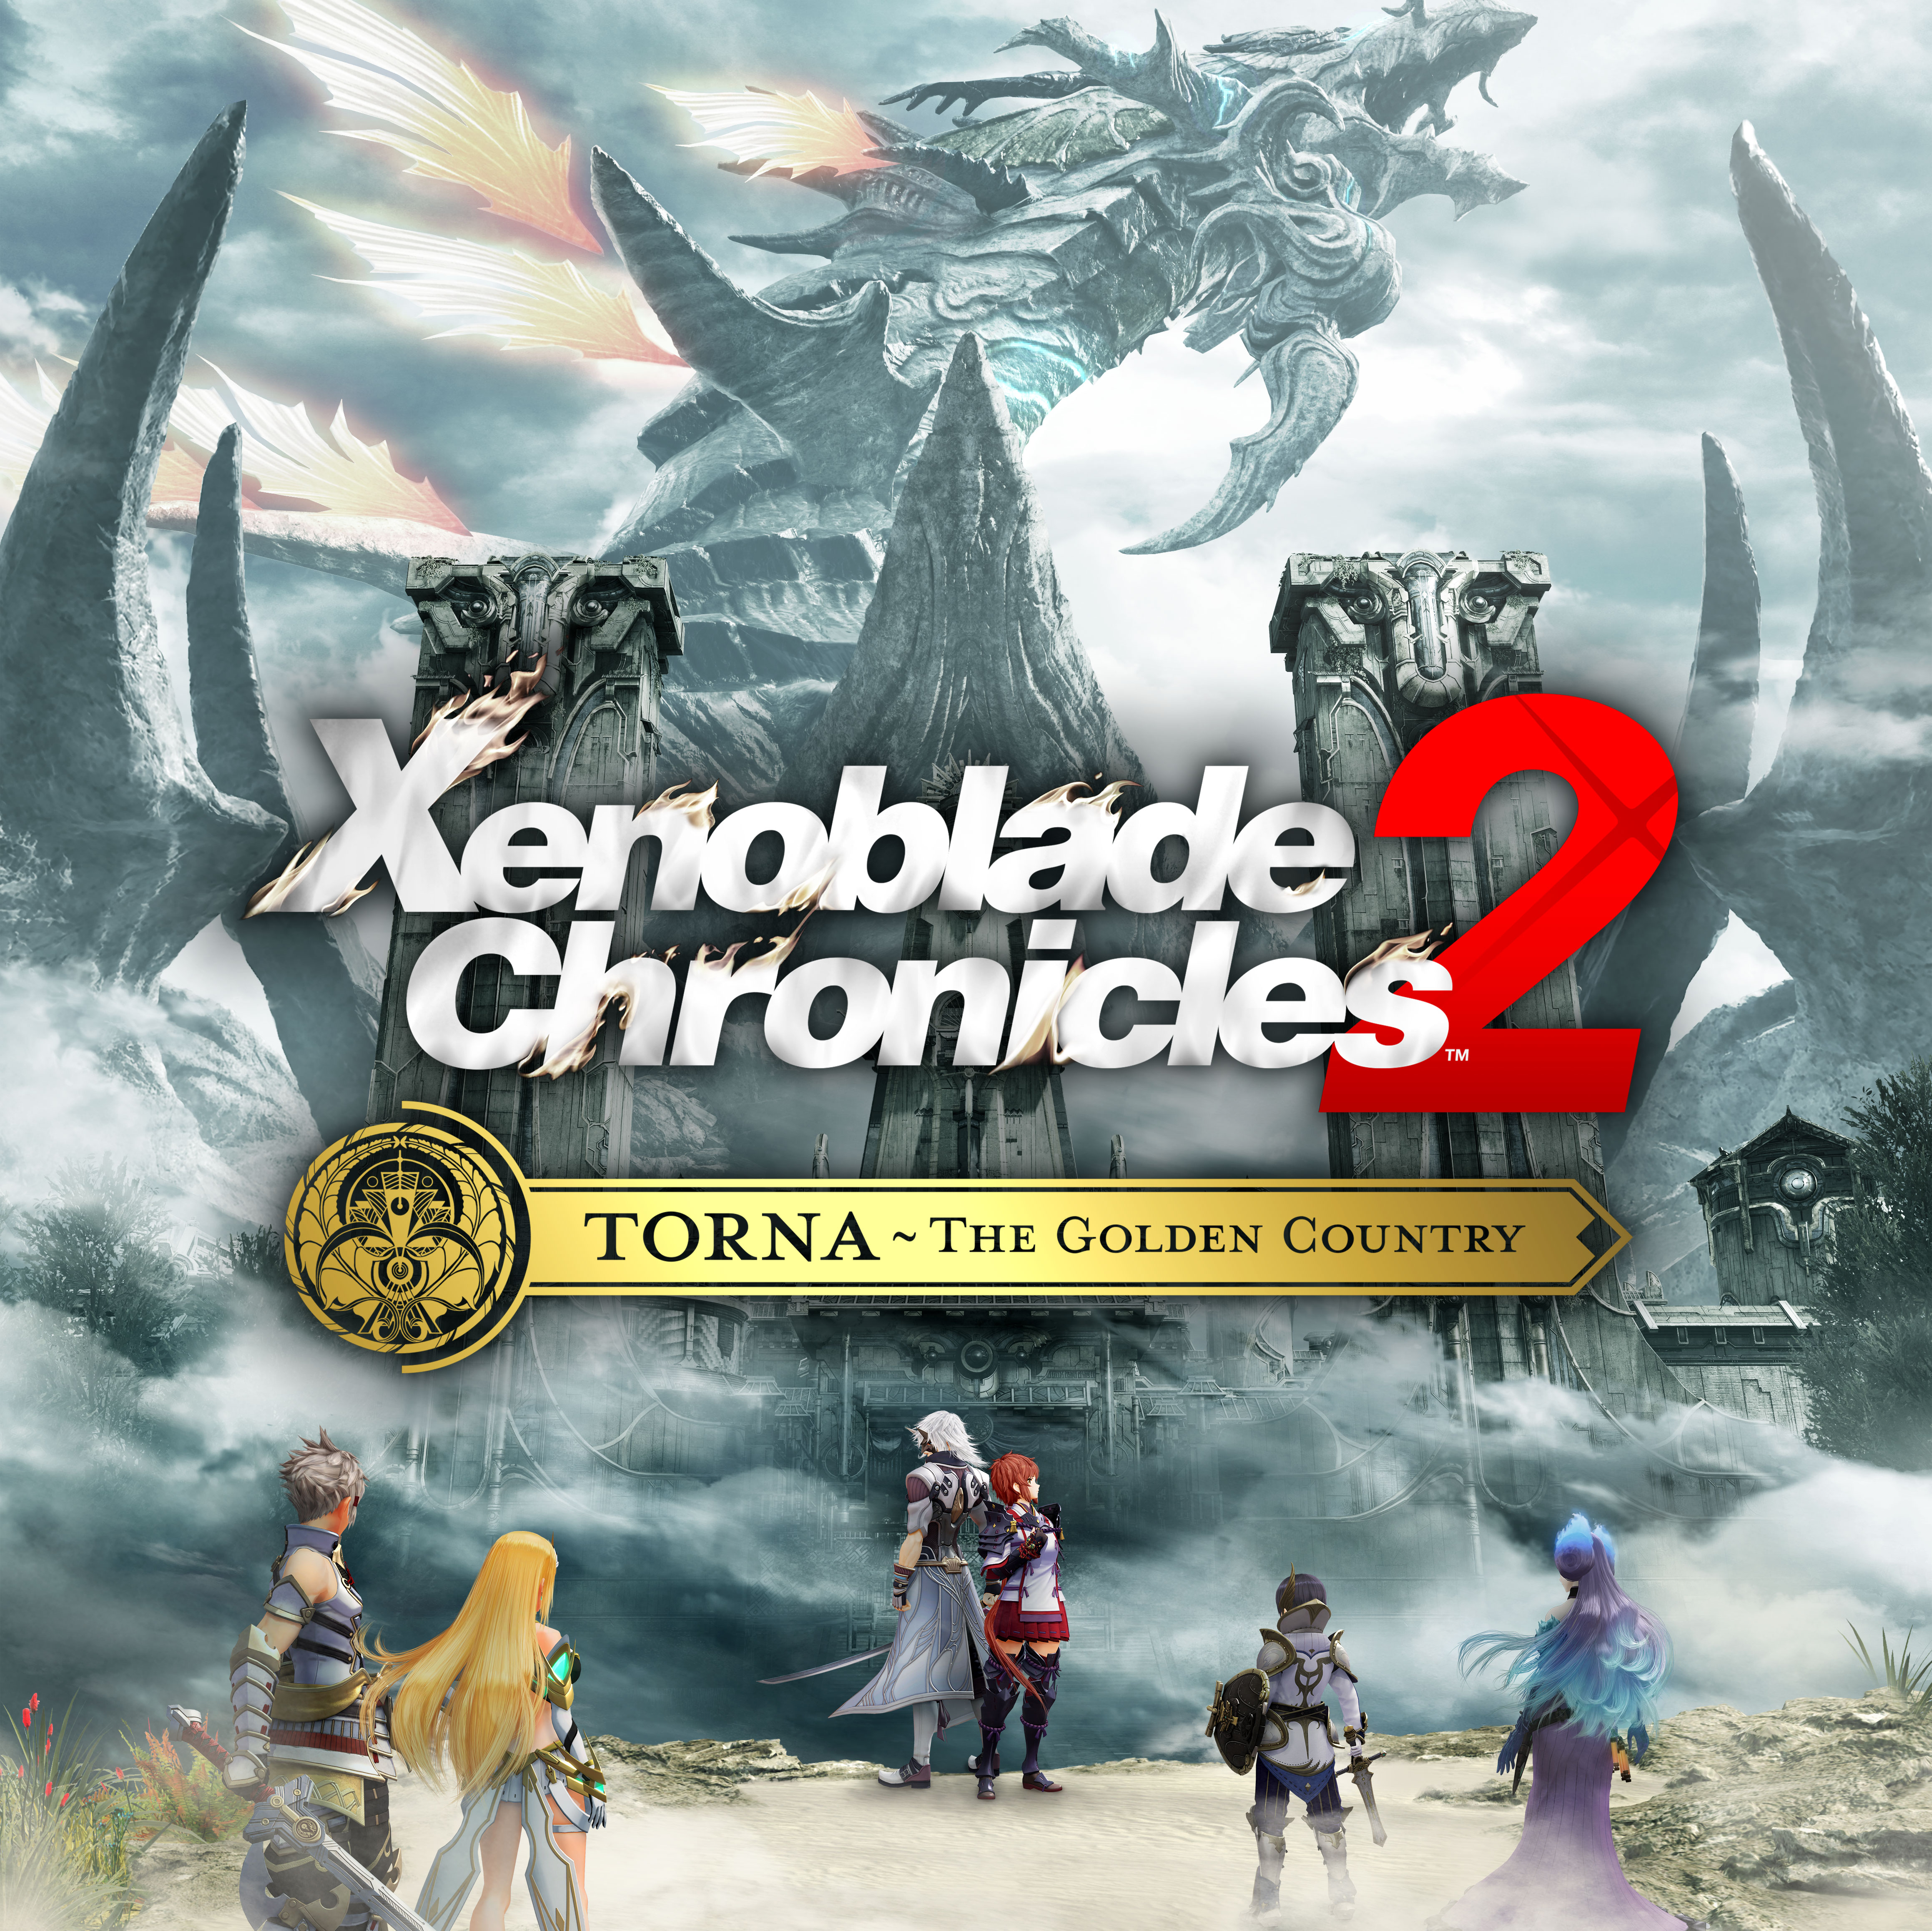 Tetsuya Takahashi di Monolith Soft svela nuovi dettagli su Xenoblade Chronicles 2: Torna - The Golden Country